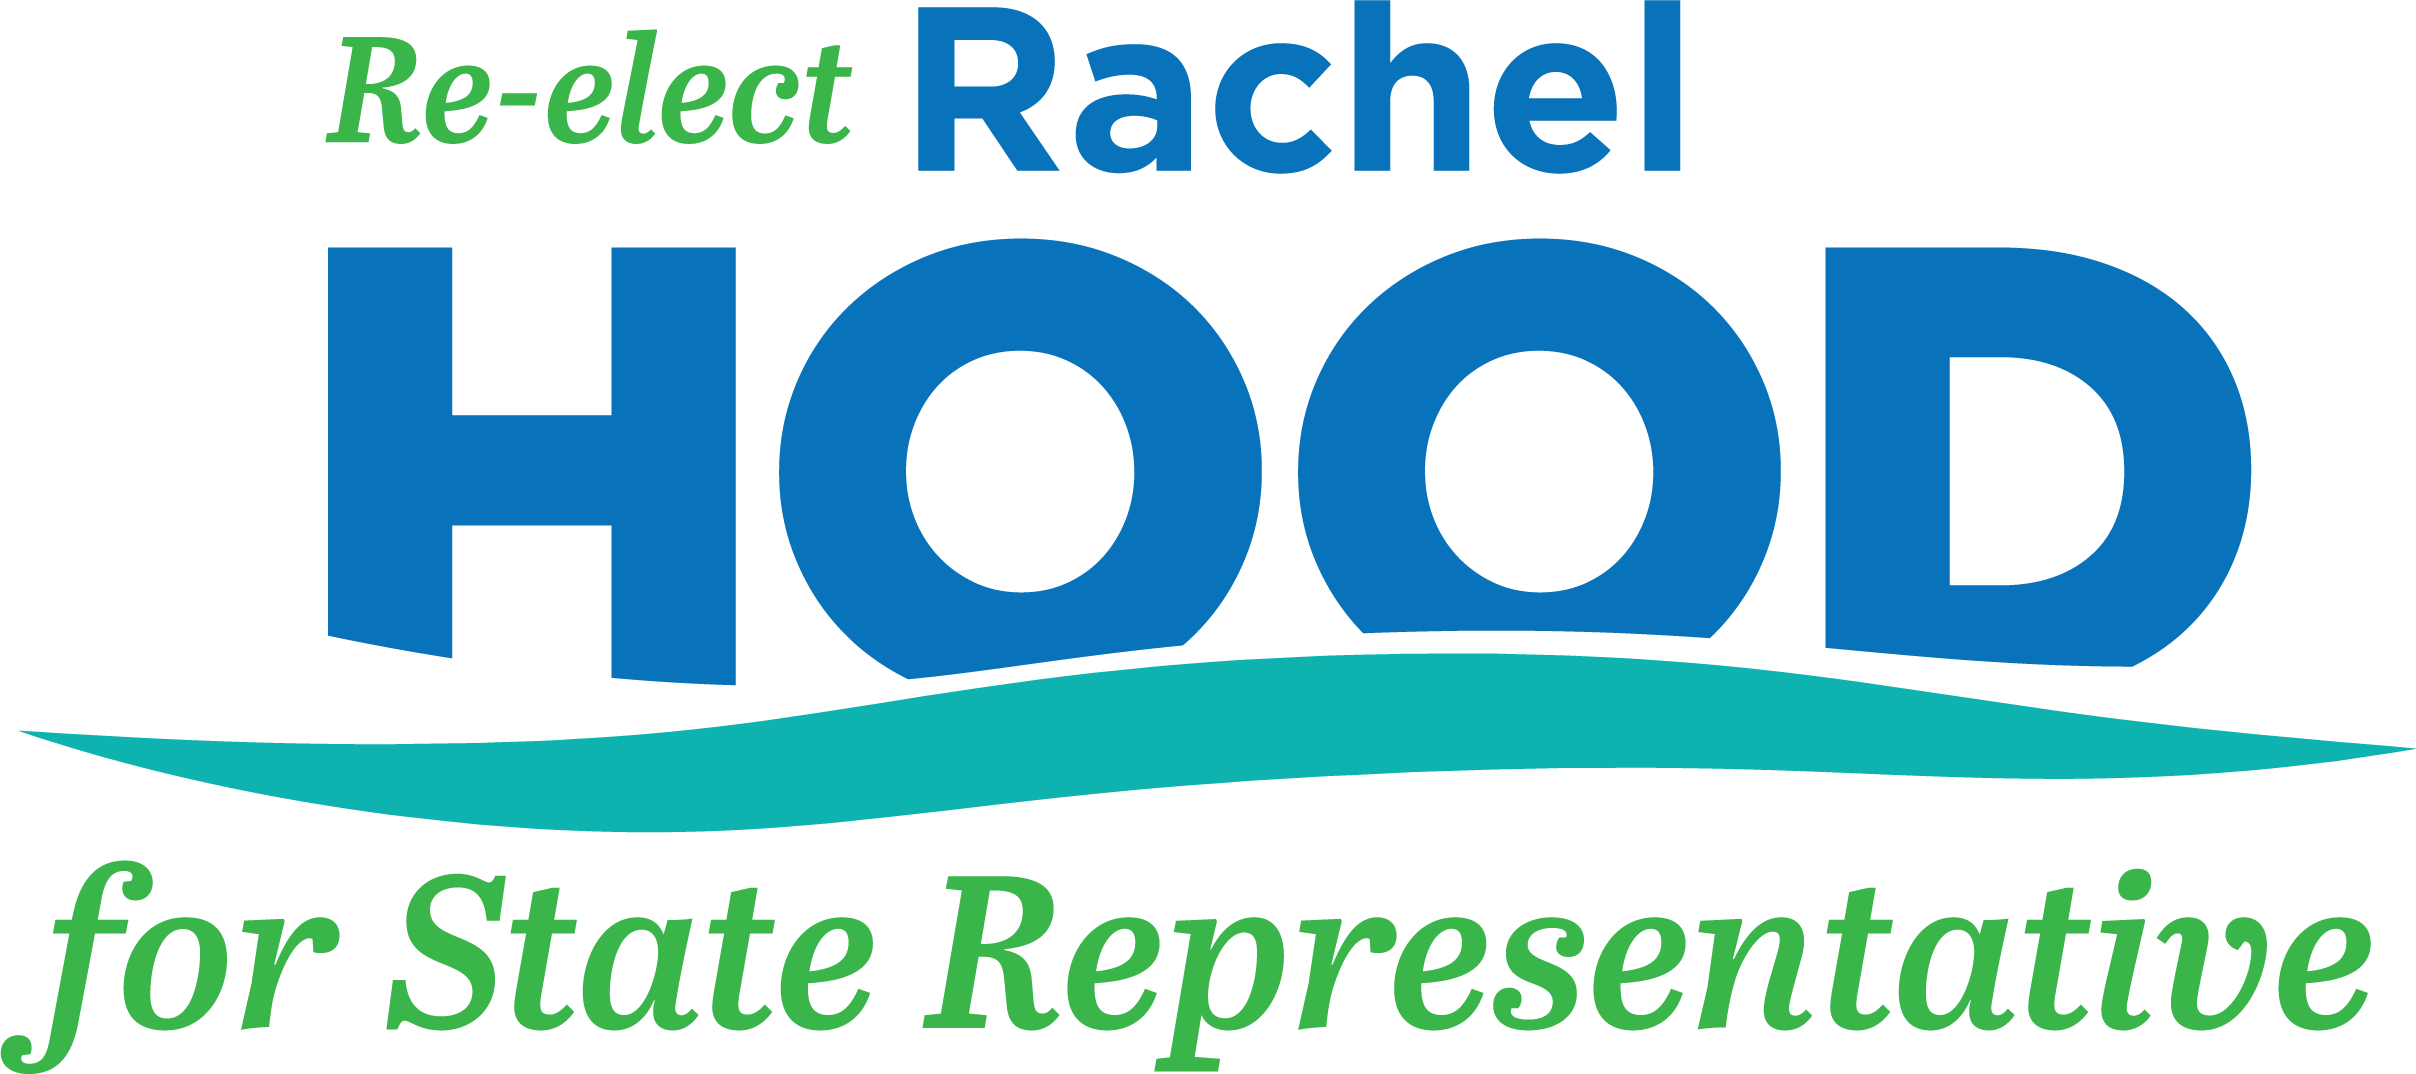 Rachel Hood for State Representative